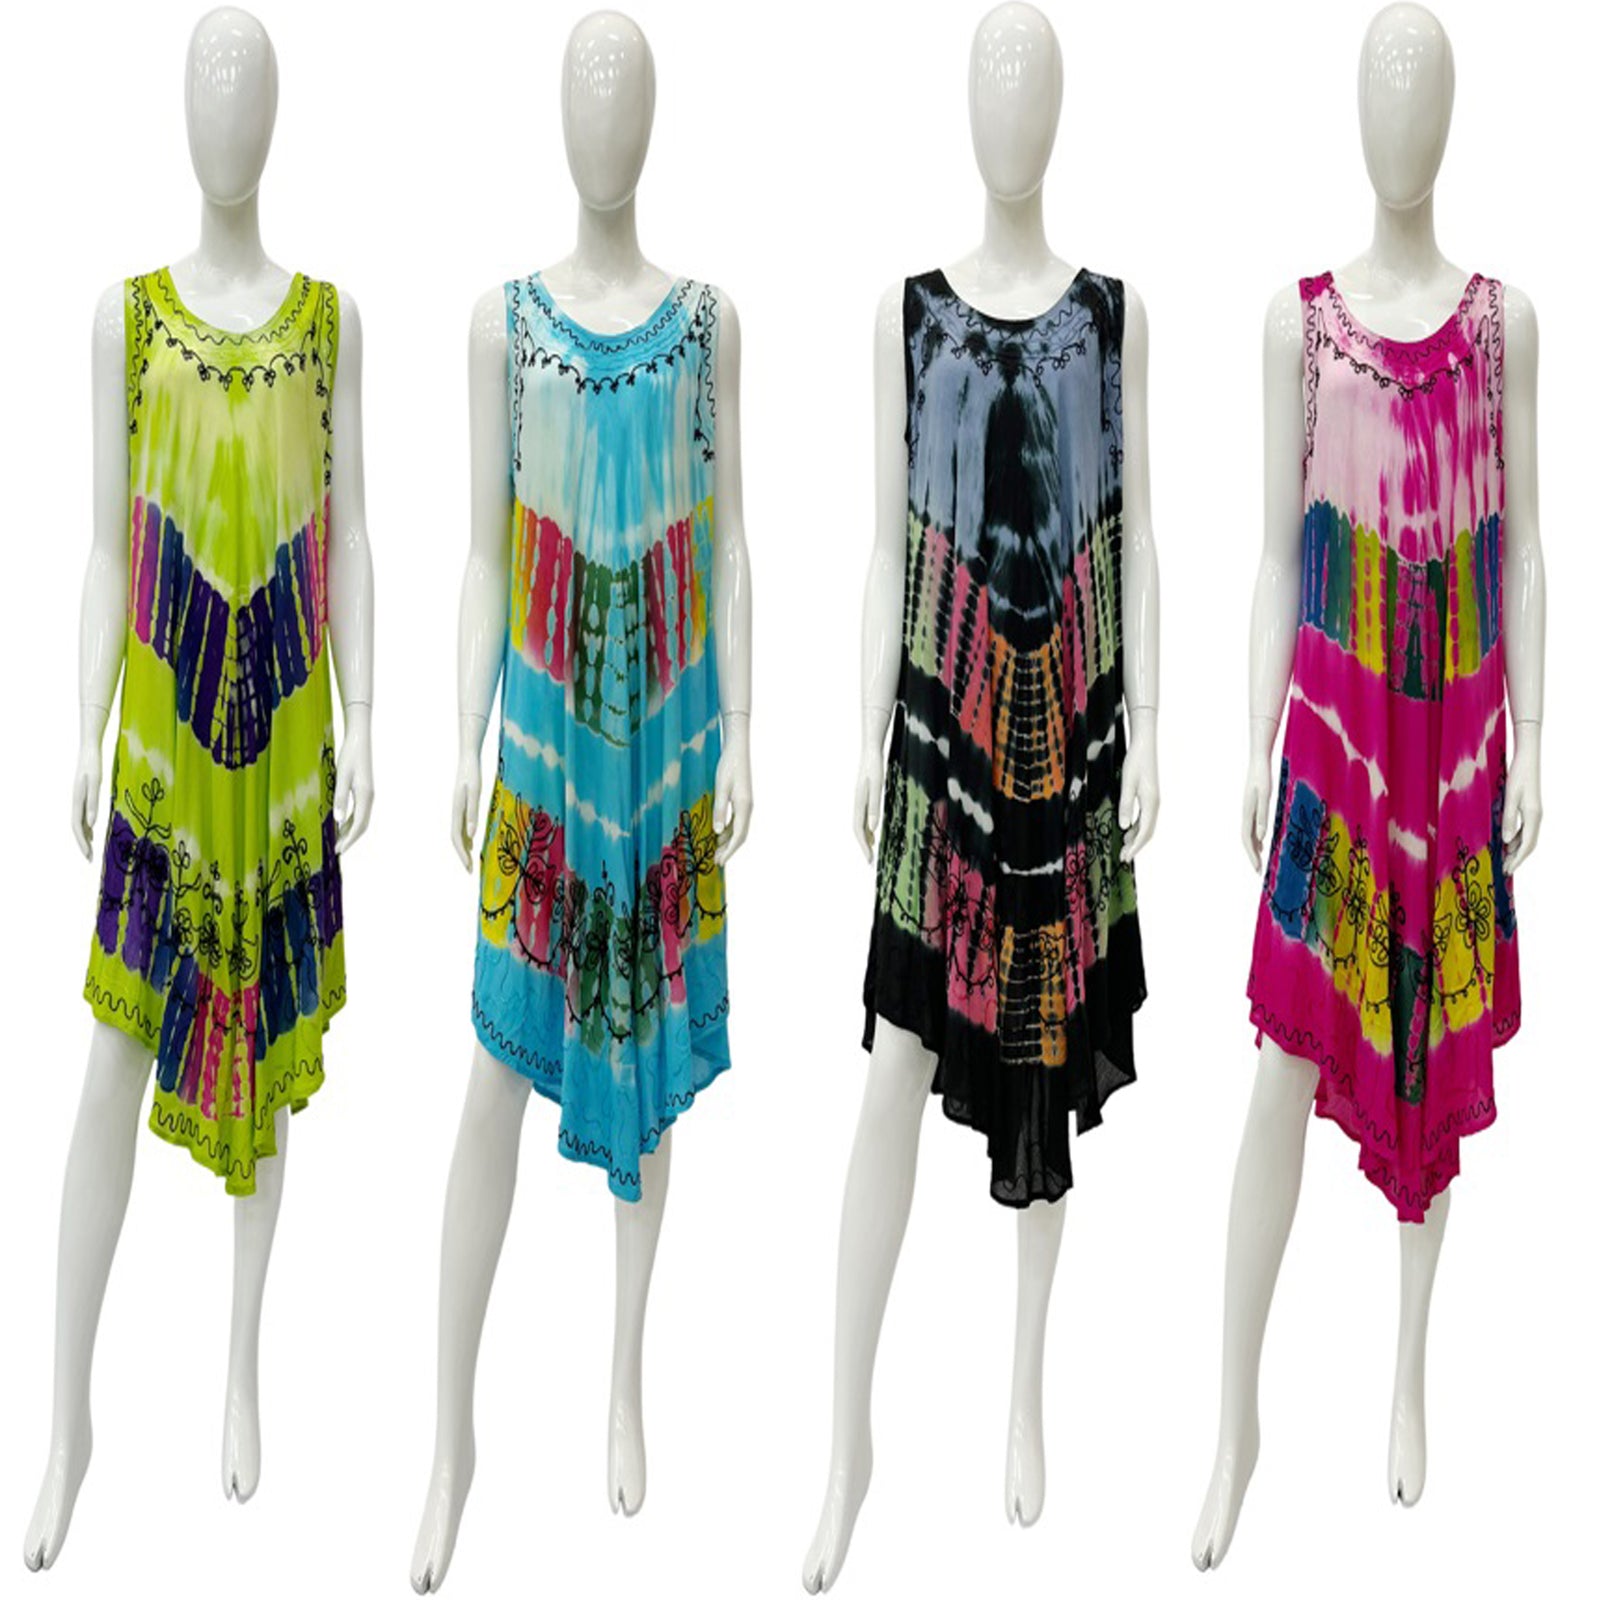 Wholesale Women's Dresses Rayon Tie Dye Umbrella Dress 6-48-Case Os 4C Galilea NWa2